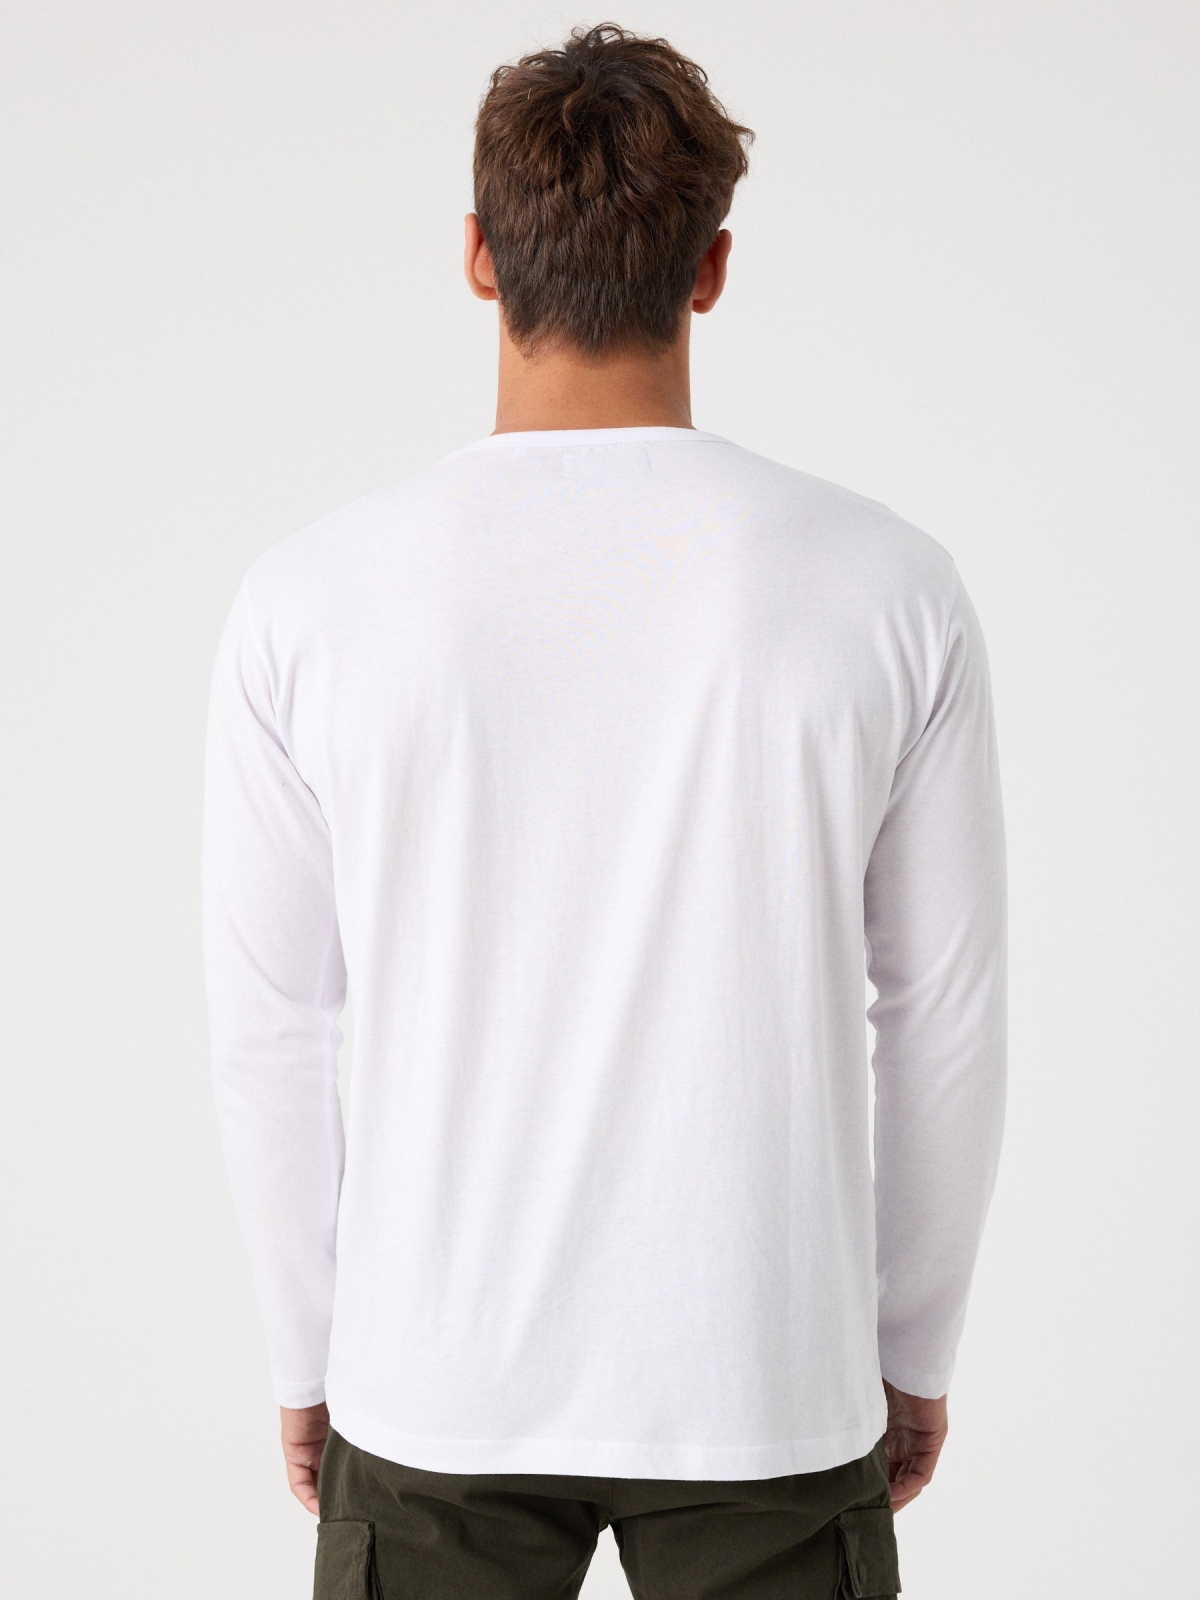 Basic long sleeve t-shirt white middle back view